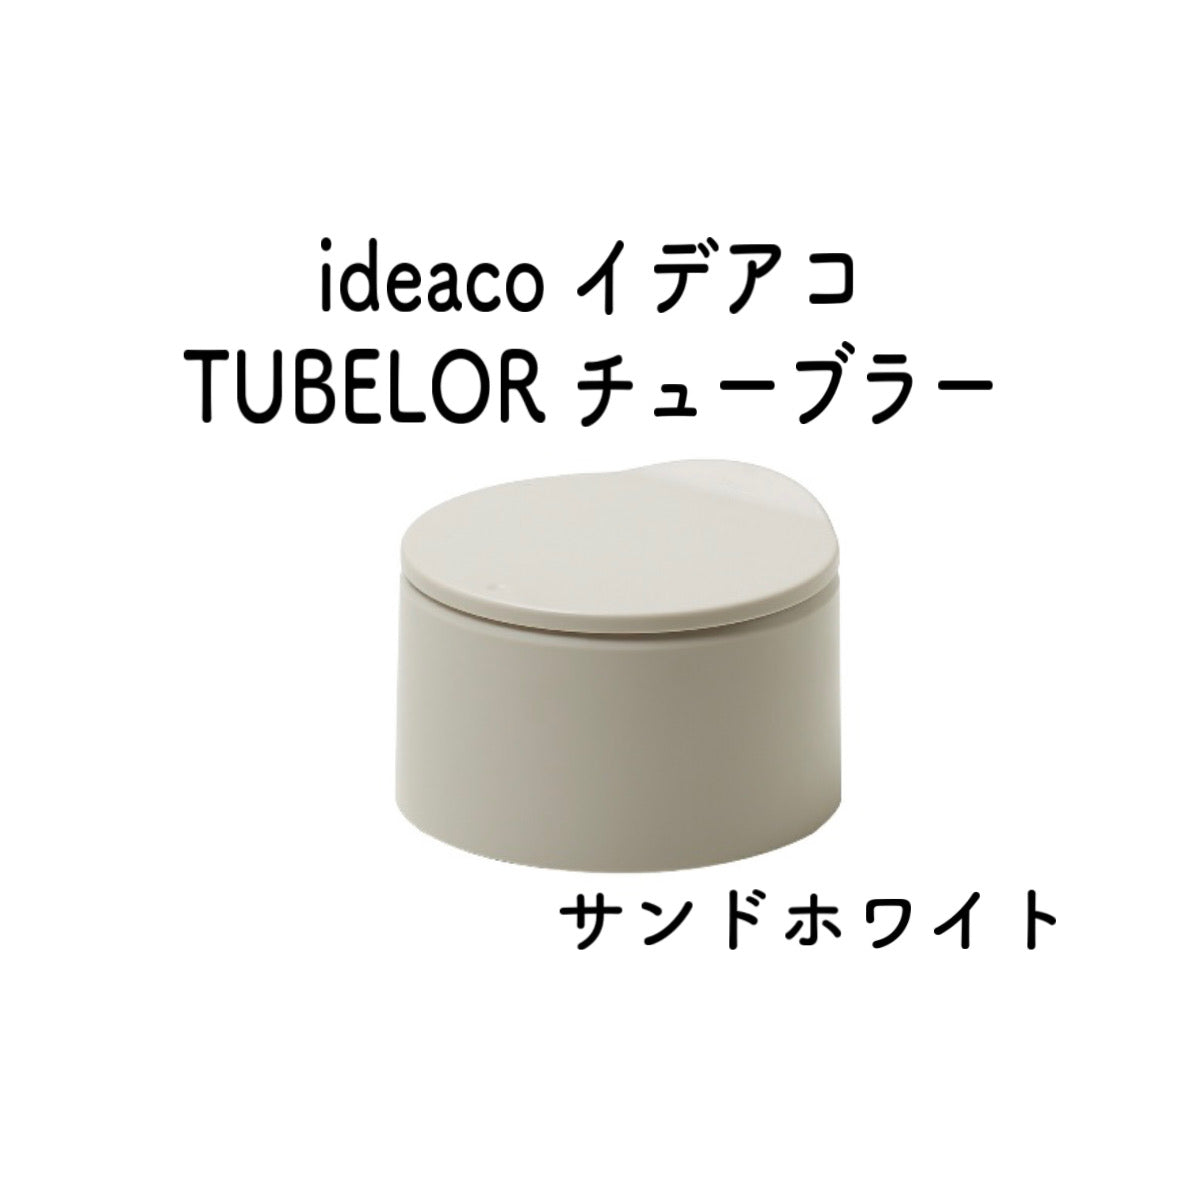 ideaco TUBELOR flat20 イデアコ チューブラー ホワイト サンドホワイト 卓上ゴミ箱 生ゴミ 丸型 衛生的 水拭き 丸洗い